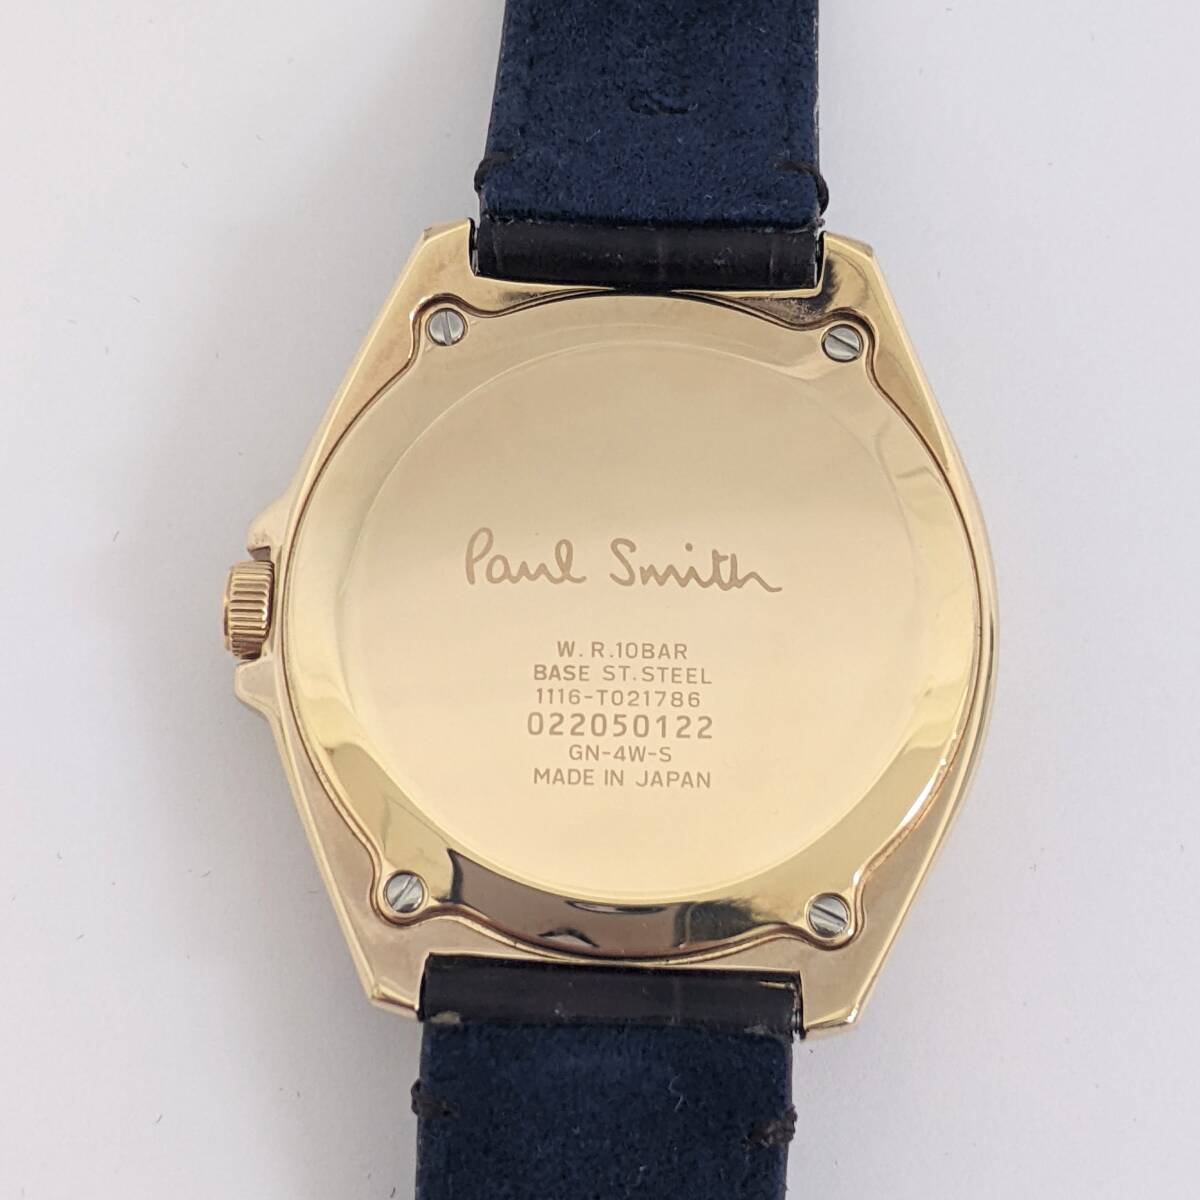 【4772】Paul Smith ポールスミス 1116-T021786 腕時計 クオーツ アナログ 3針 ステンレススチール レザーベルト メンズ 箱有り 美品_画像5